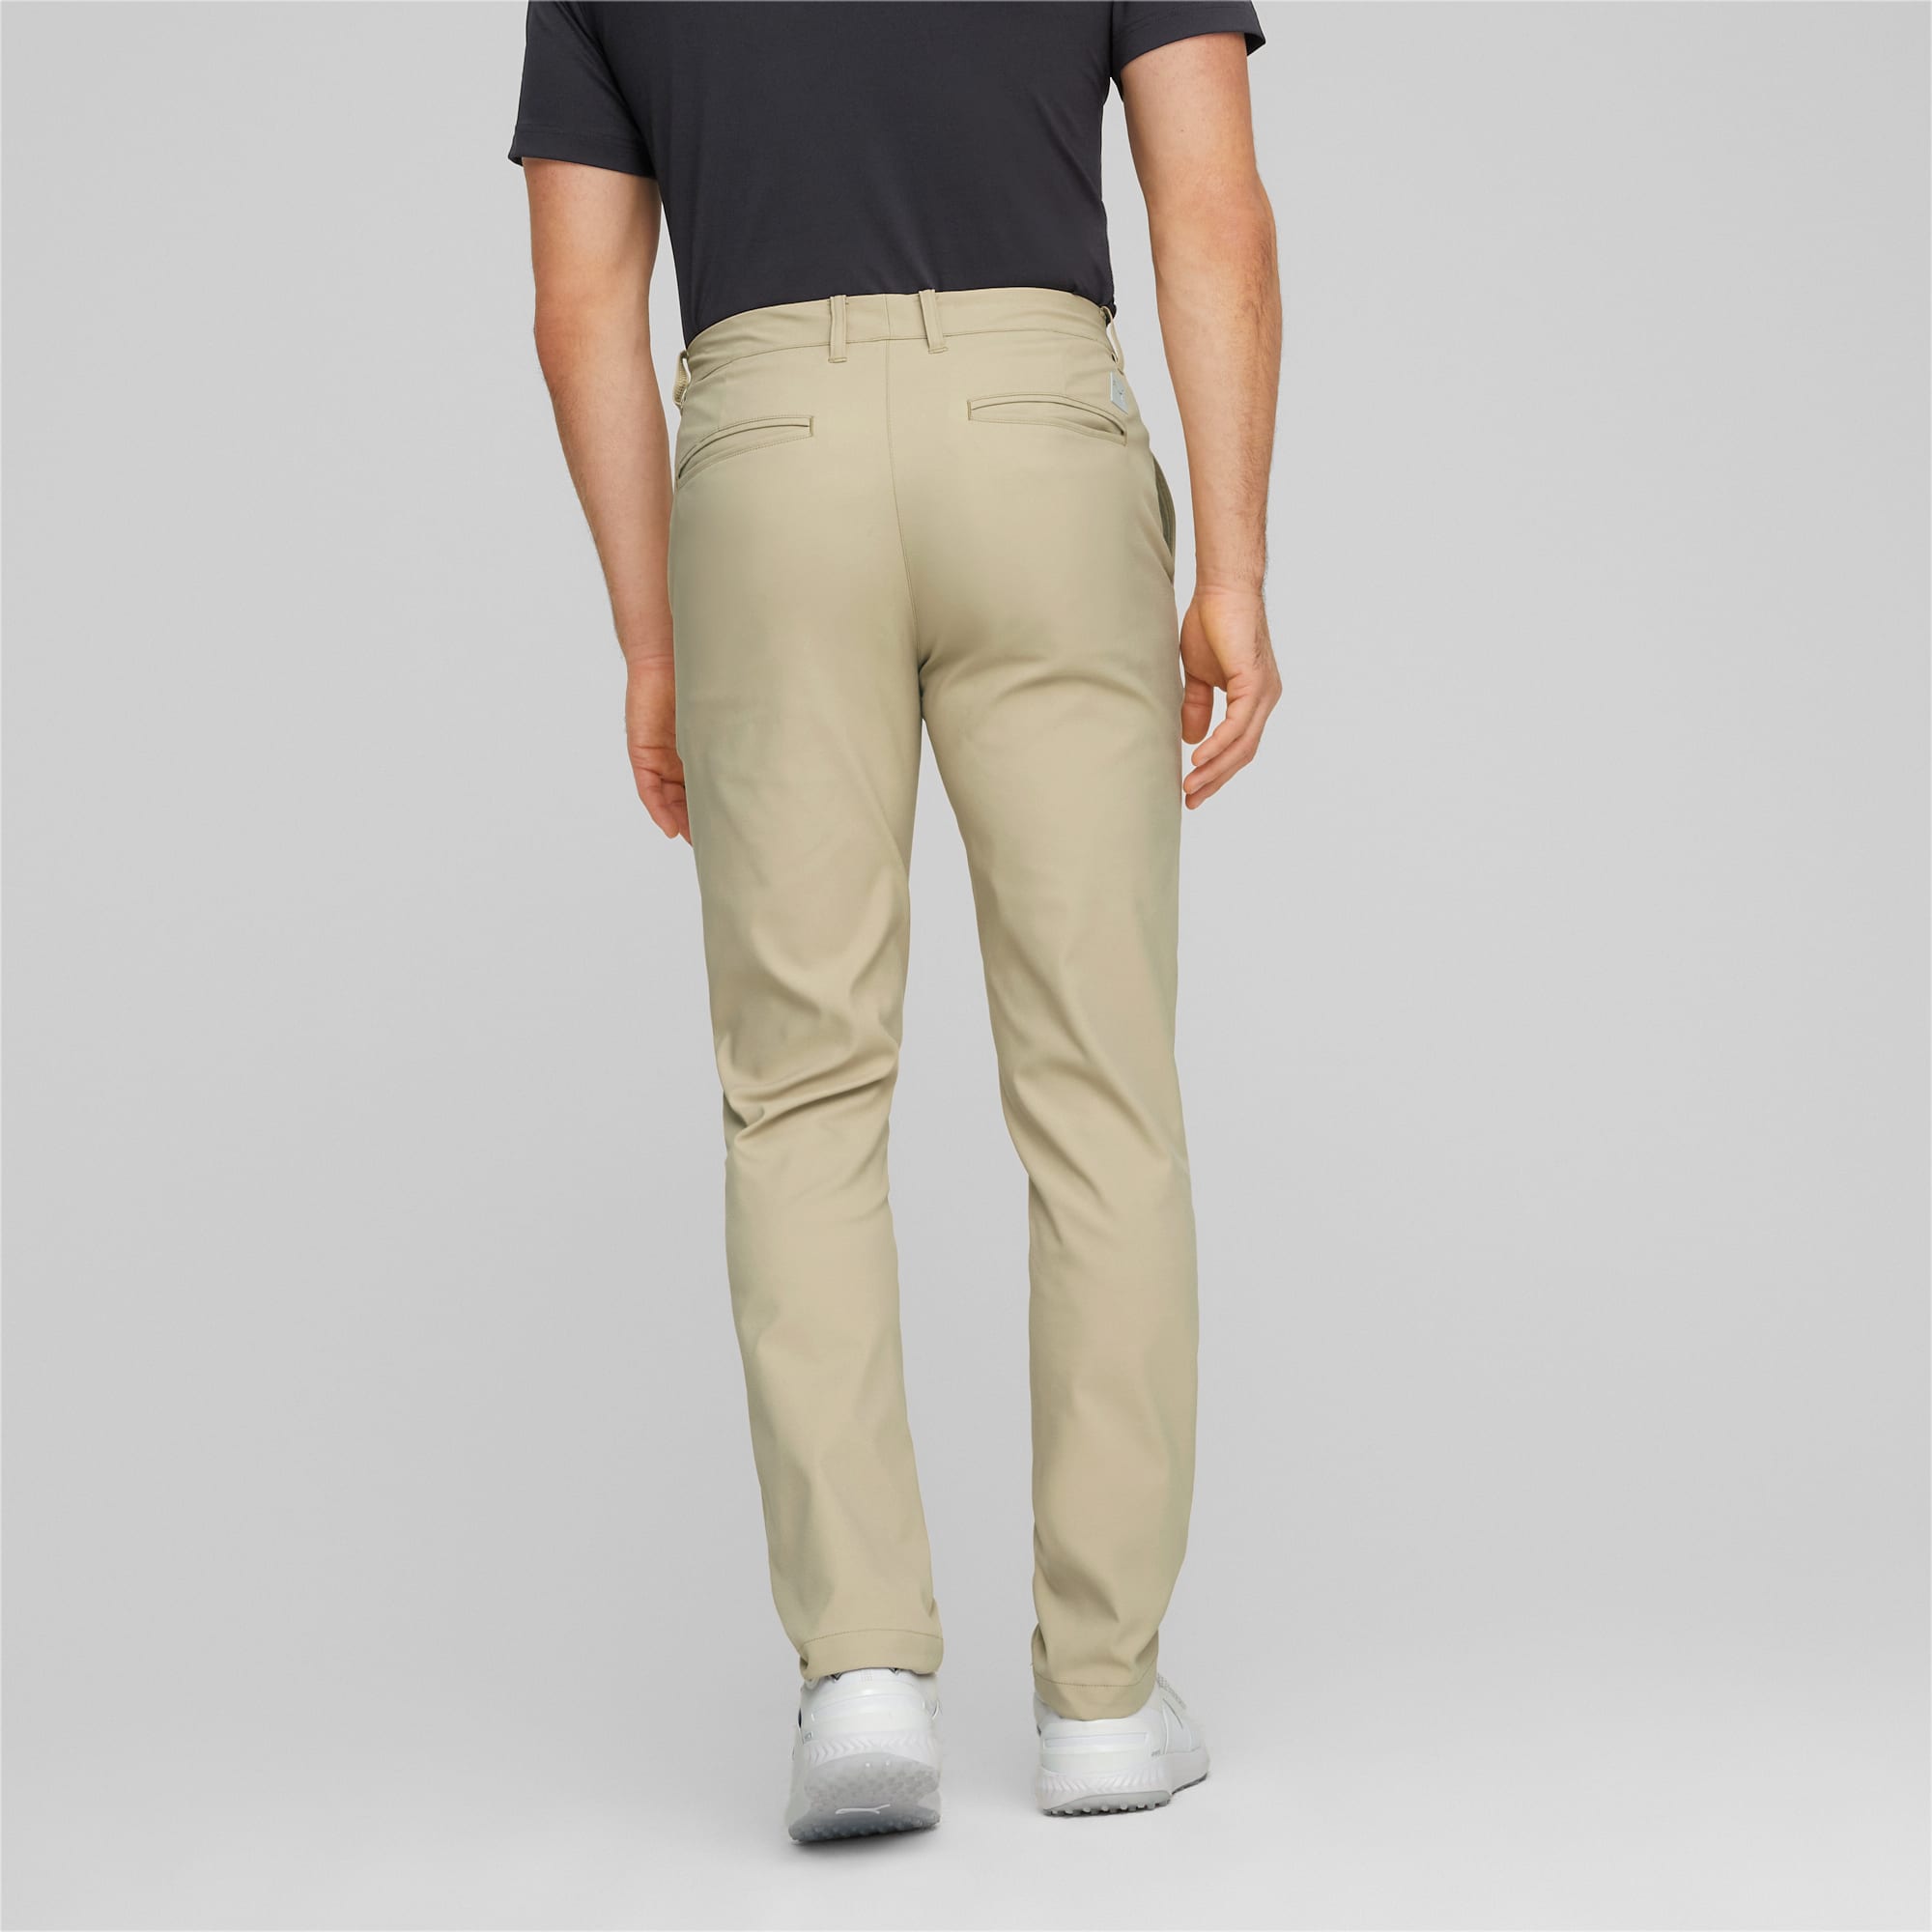 PUMA Dealer Tailored Golf Pants Men, Alabaster, Size 38/30, Clothing